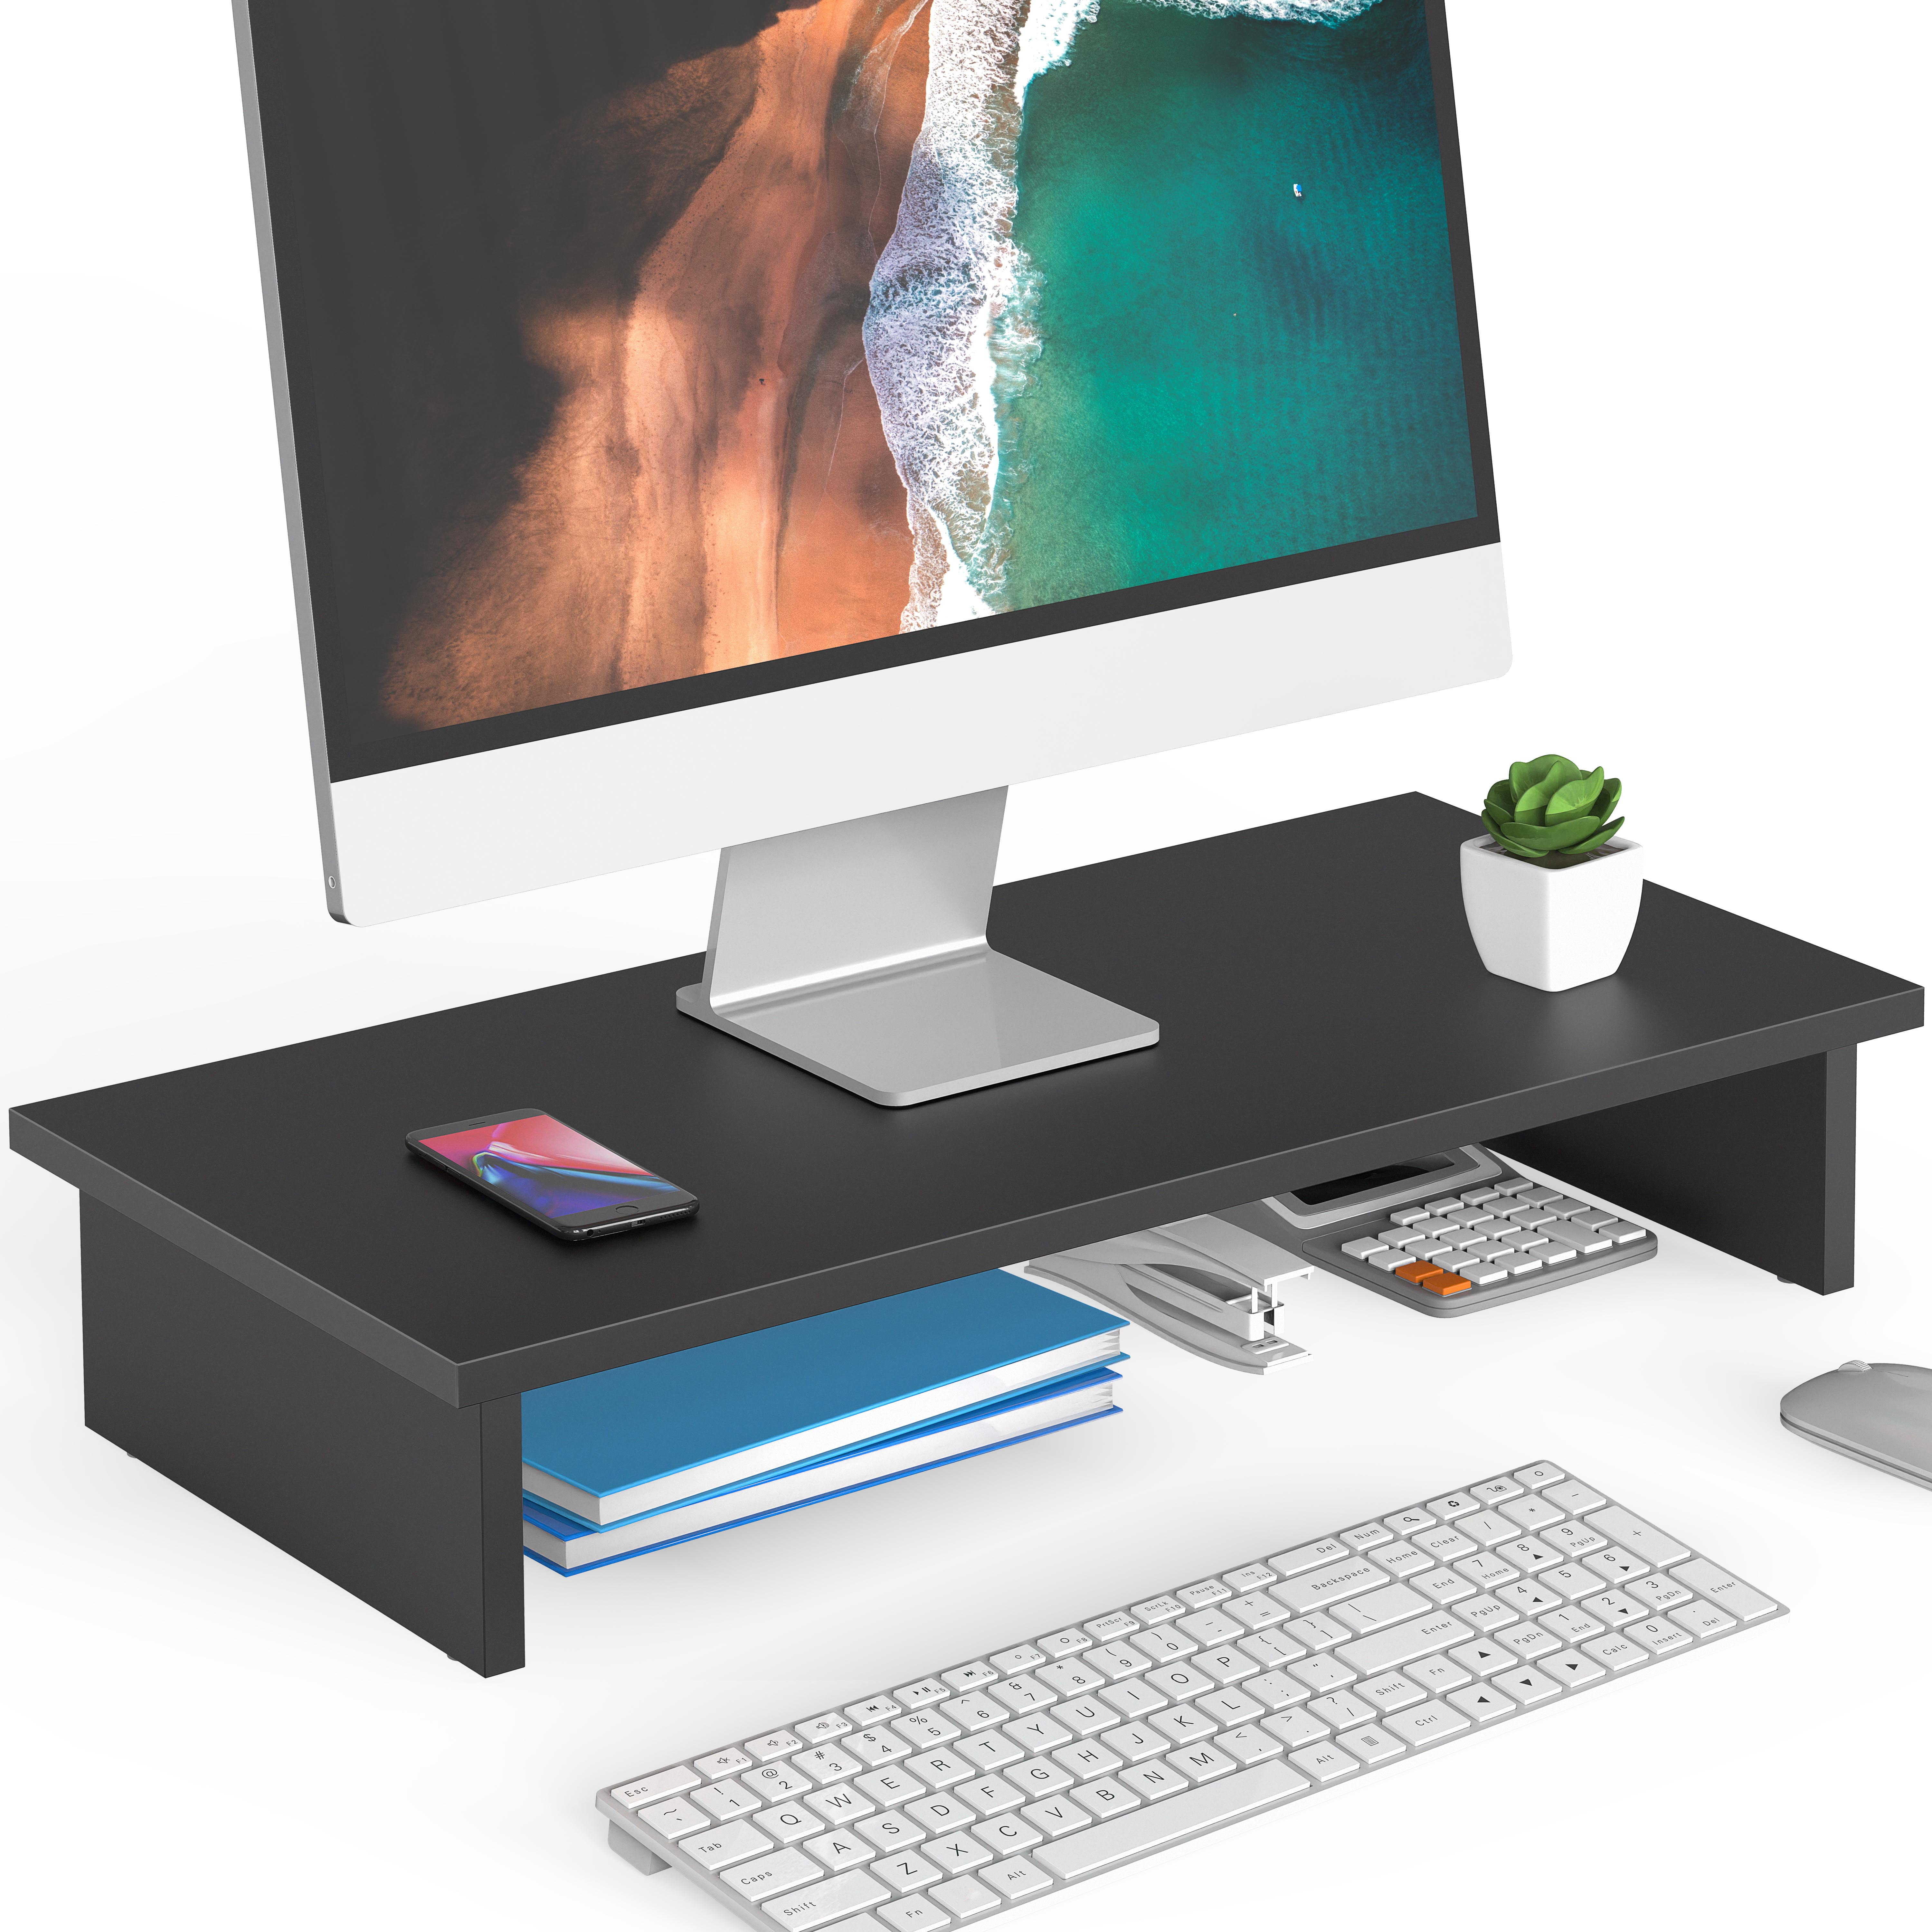 Heighter Monitor Led Riser Computer Laptop Desktop Shelf Rack Organizer Office 